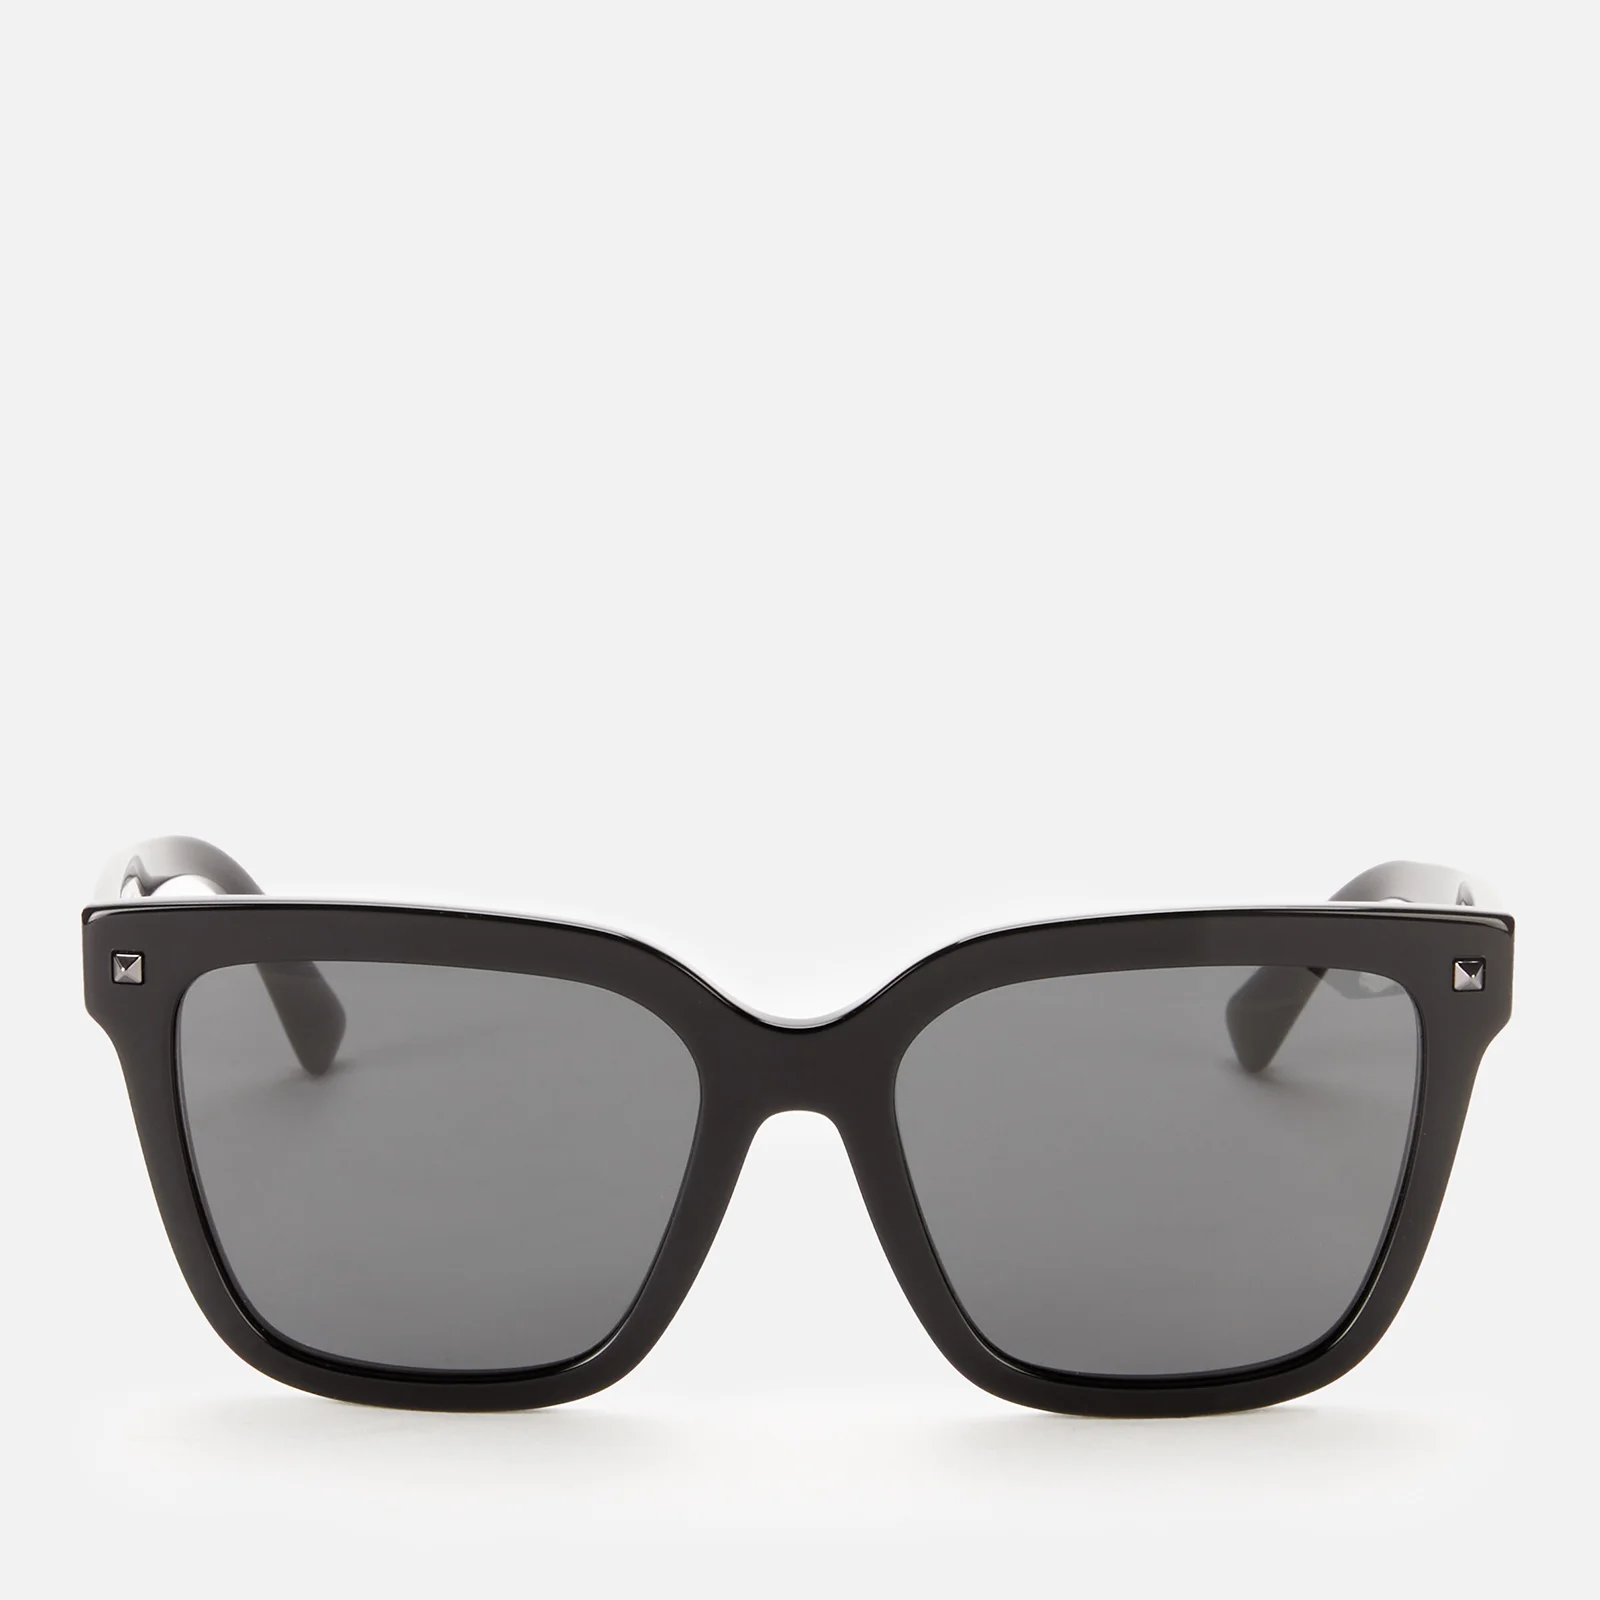 Valentino Women's Legacy Acetate Squared Frame Sunglasses - Black Image 1